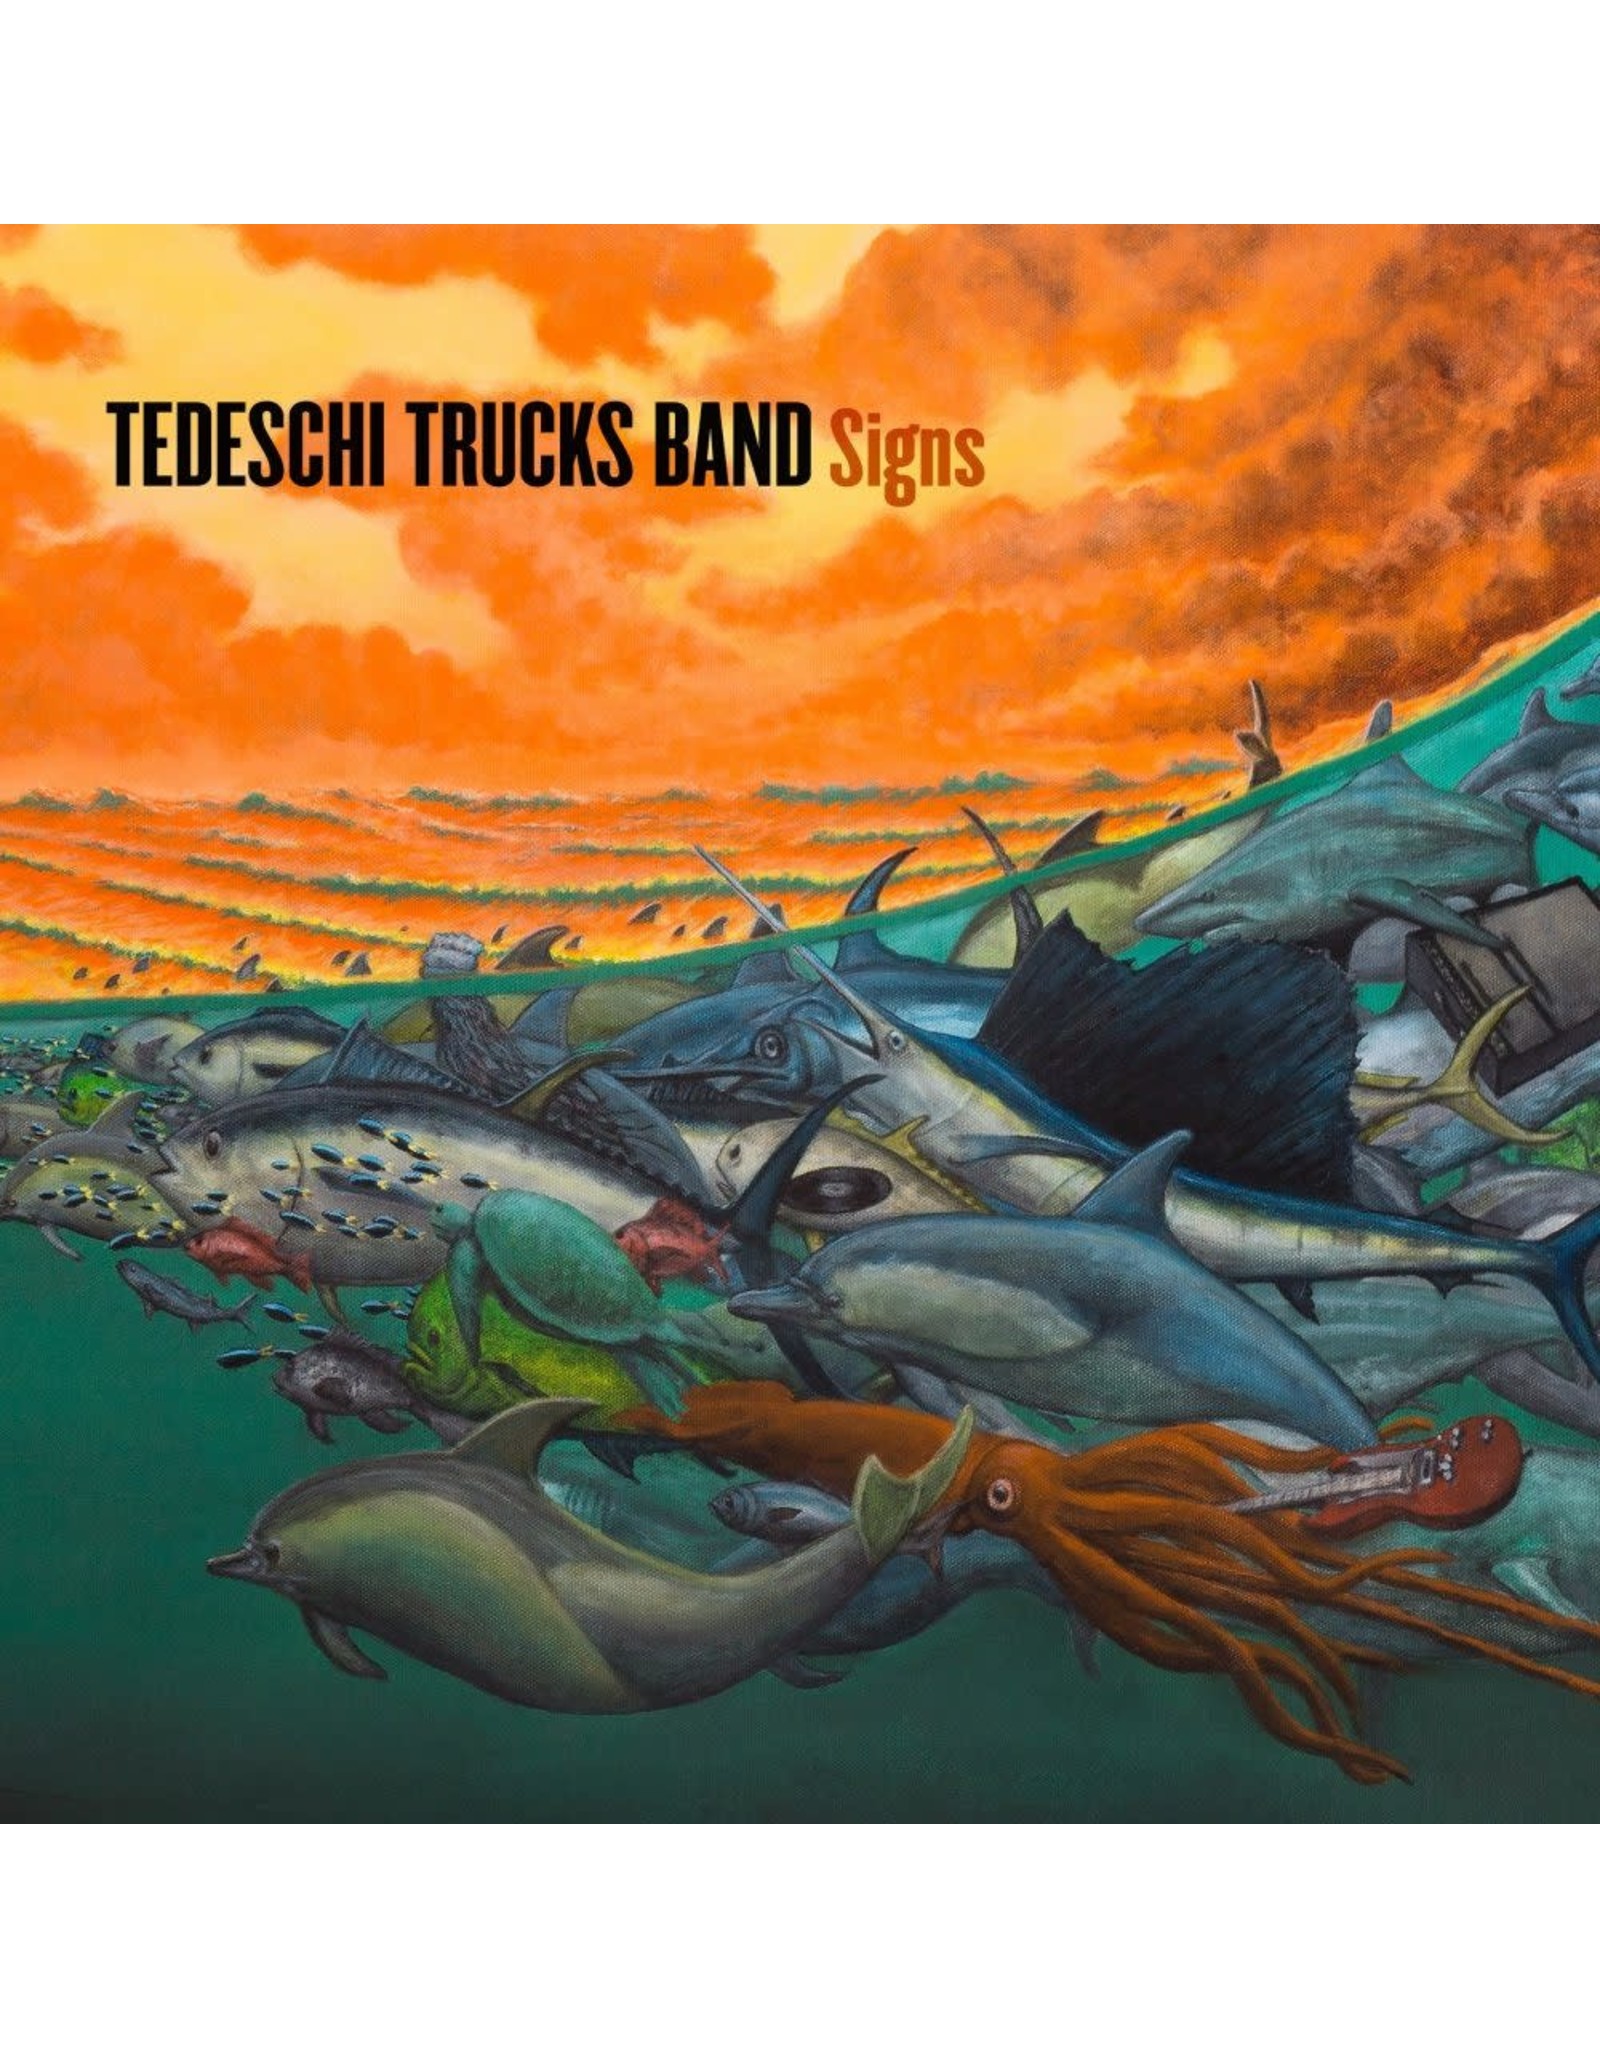 Tedeschi Trucks Band - Signs (w/ bonus 7" single)